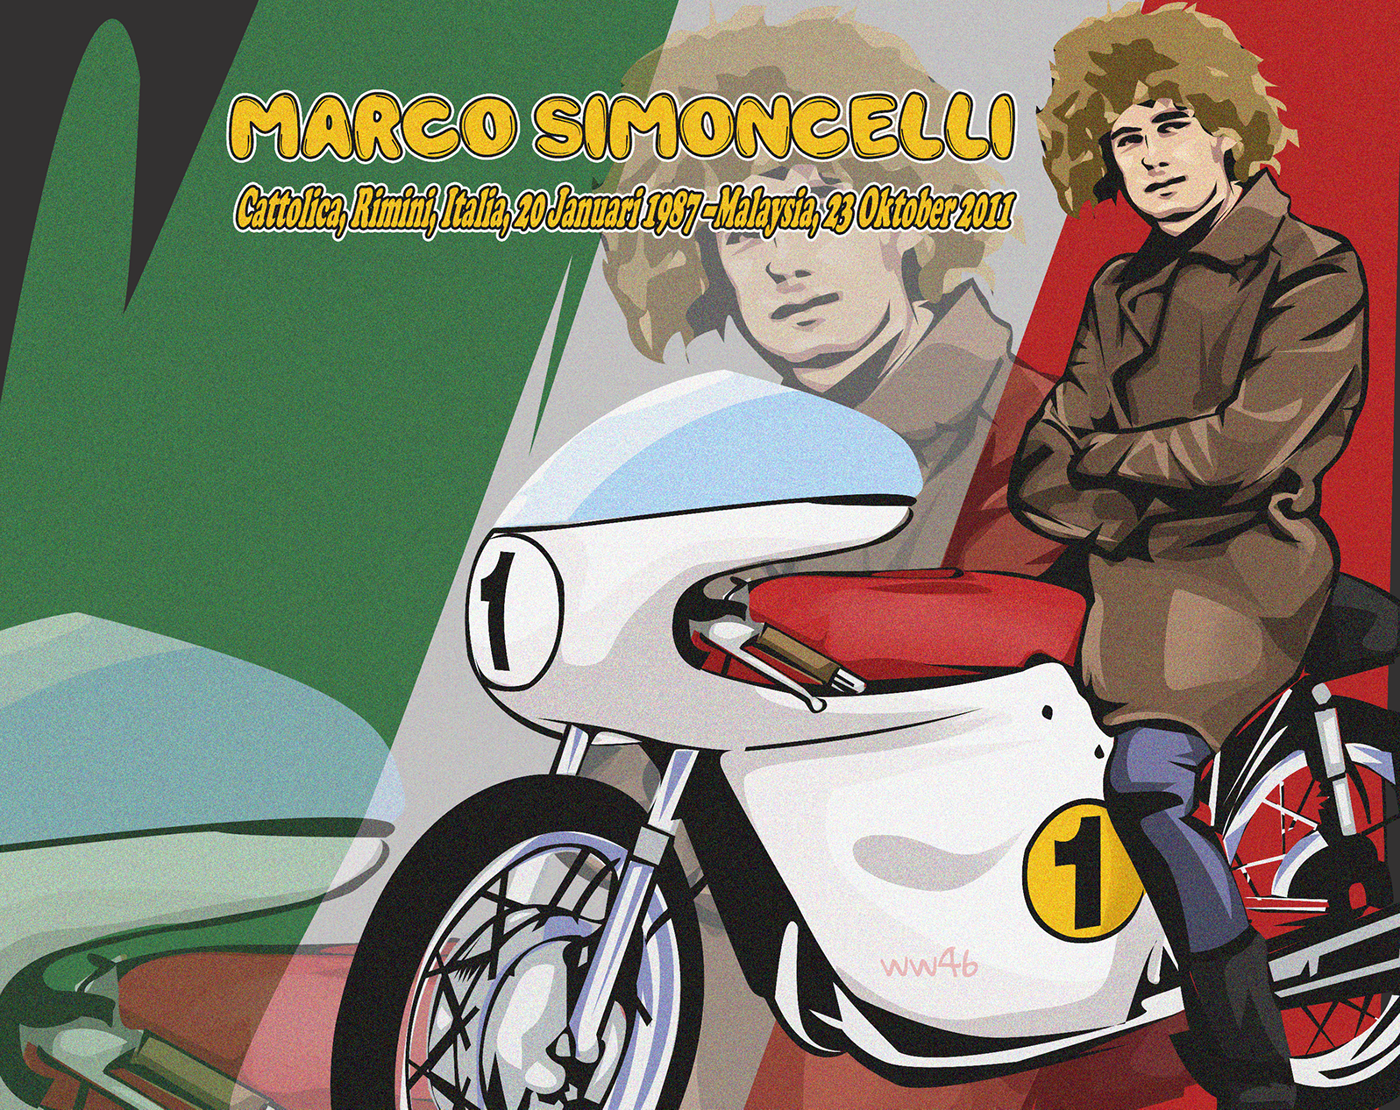 #motogp#marcosimoncelli#rip#cartoon#honda#italia